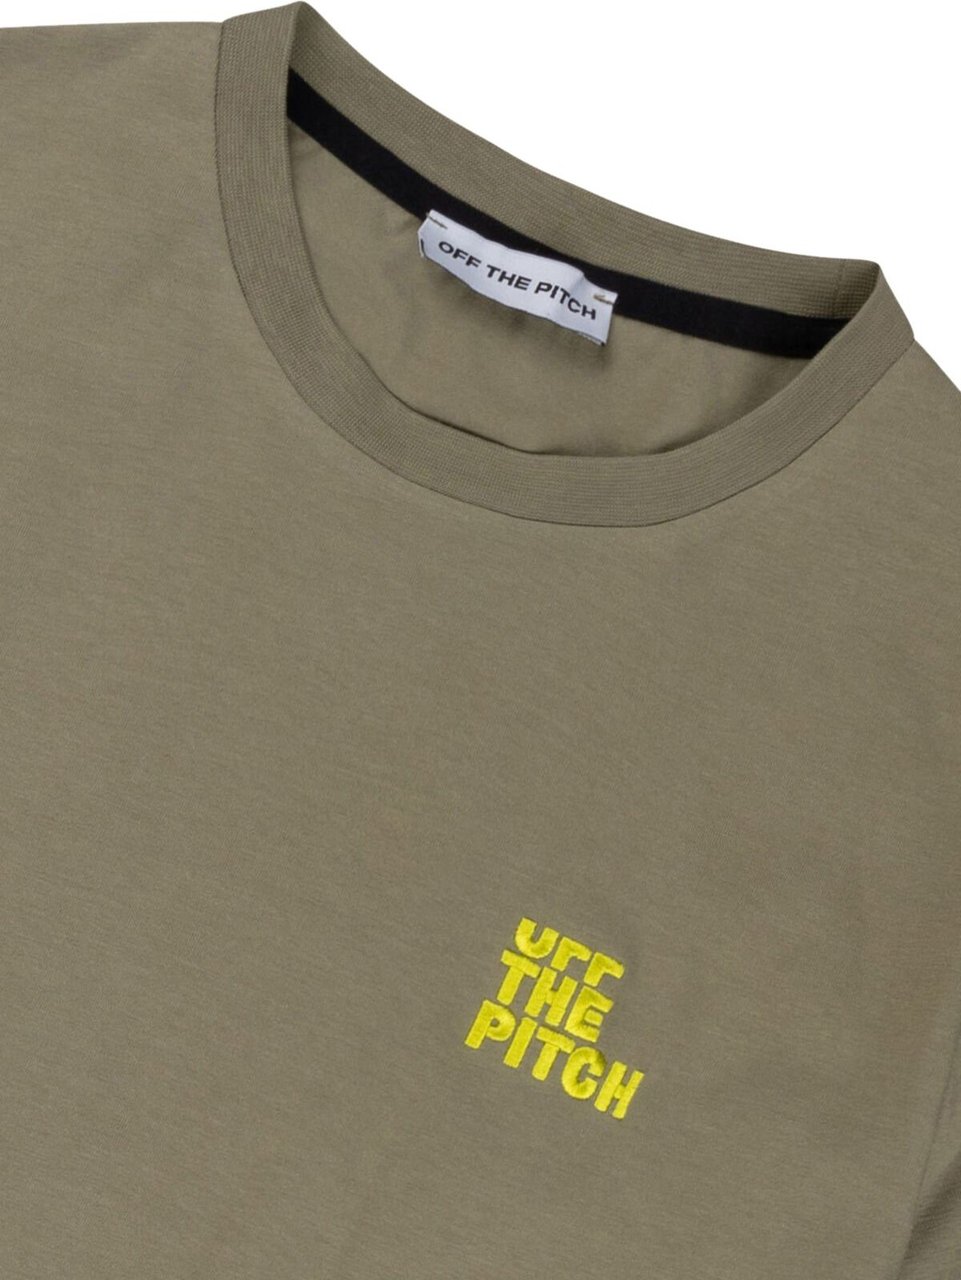 OFF THE PITCH Fullstop Slim Fit T-Shirt Heren Groen Groen